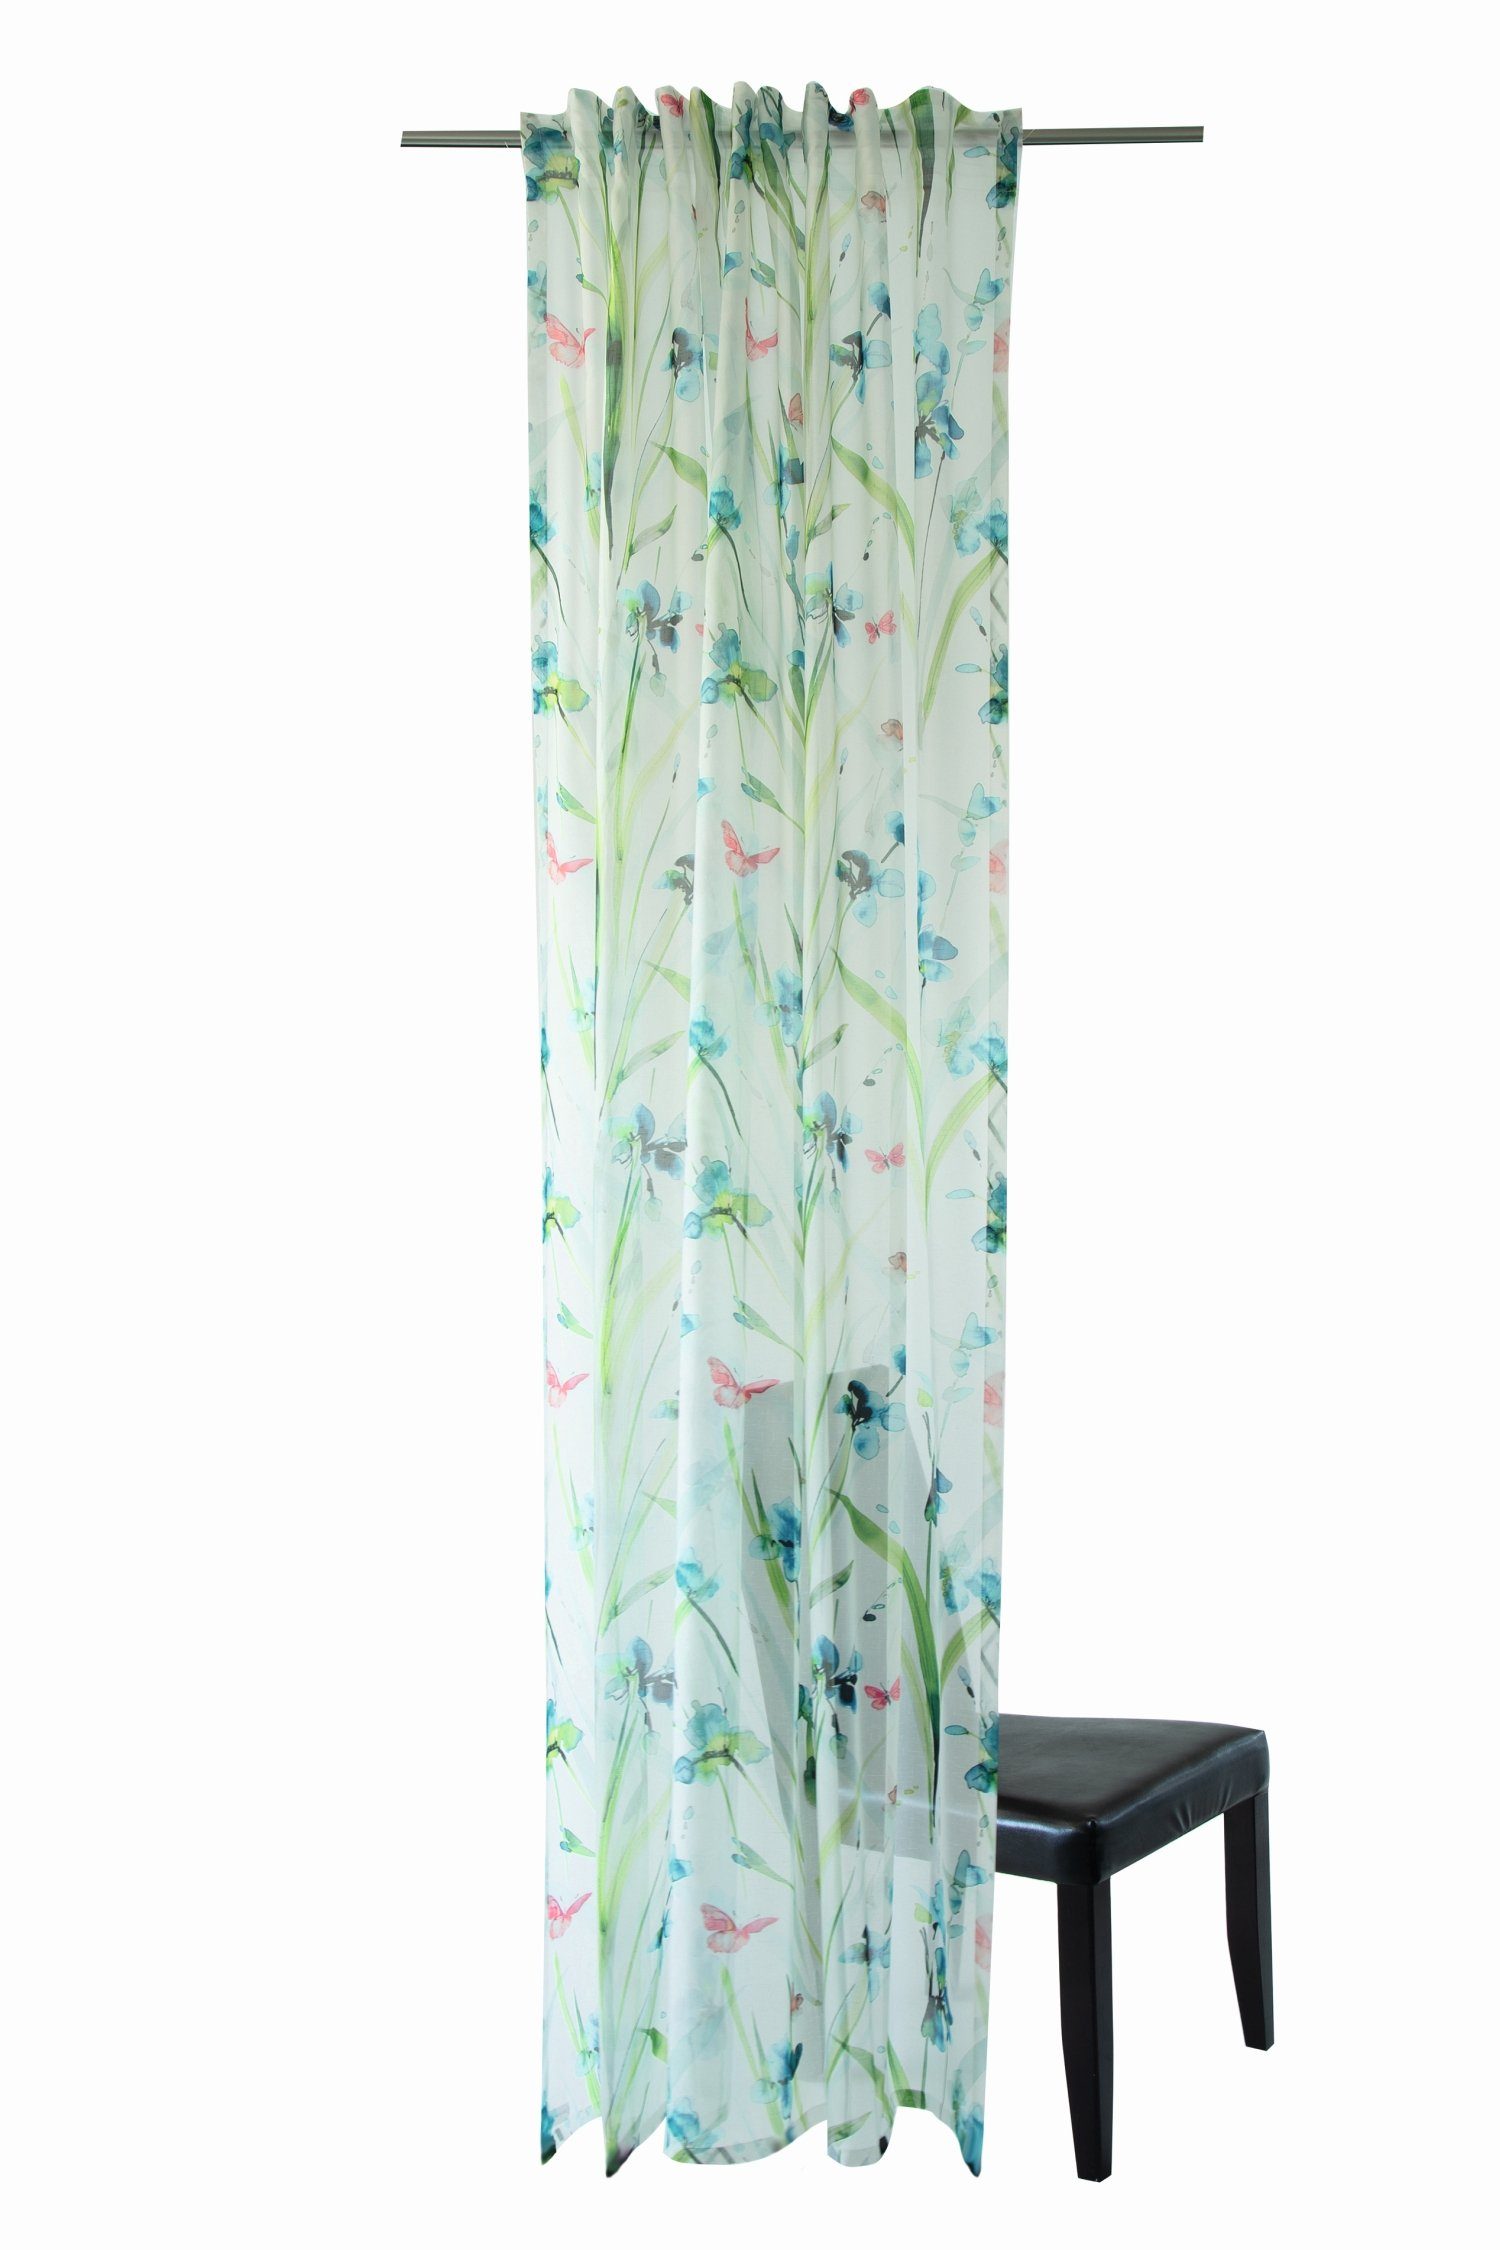 Schlaufenschal Vorhang, multicolor Vorhang Skratta HOMING, 140x245 transparent Homing Lichtschutz,